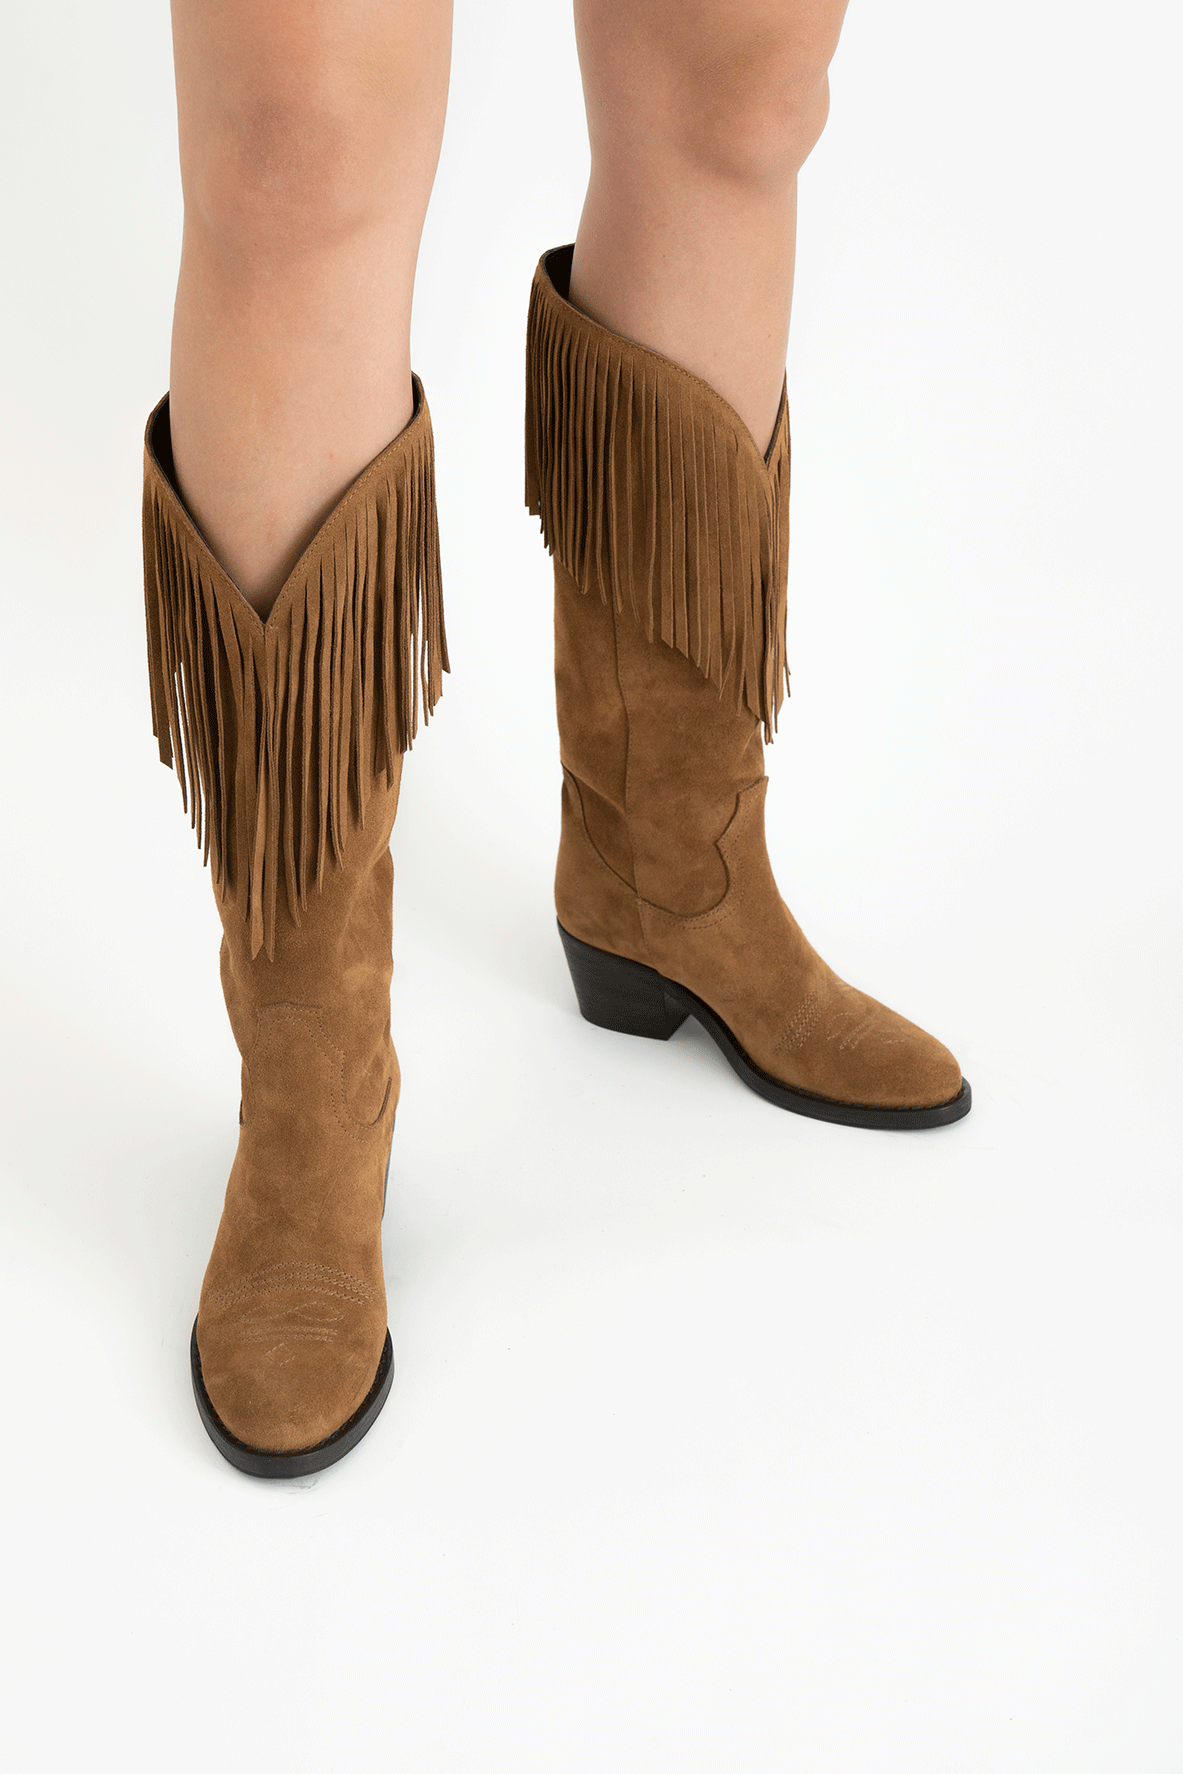 Wynonna cowboy boots, brown suede